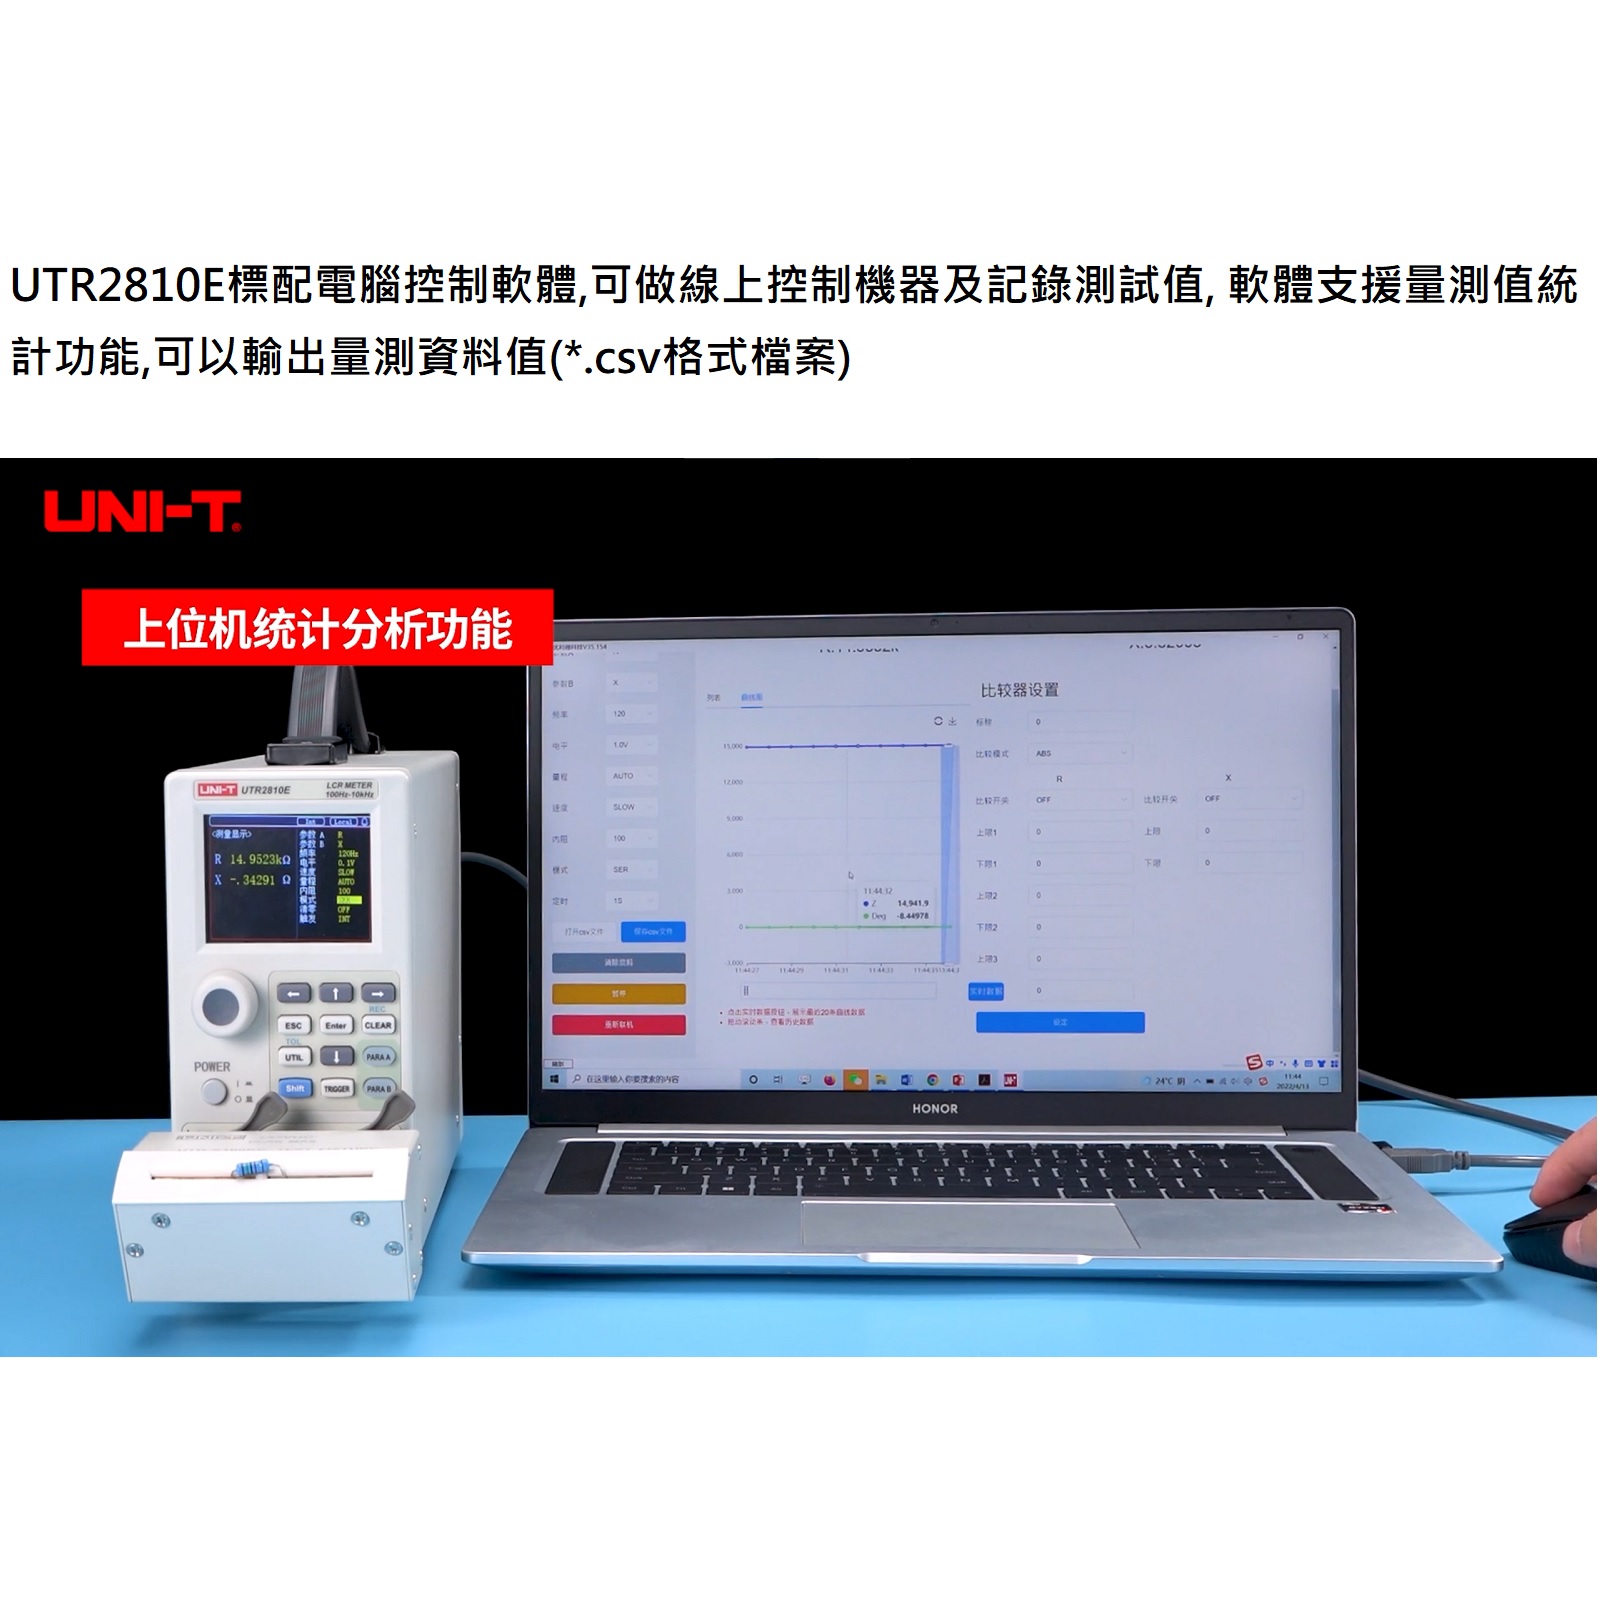 UTR2810E經濟型LCR錶軟體控制介紹